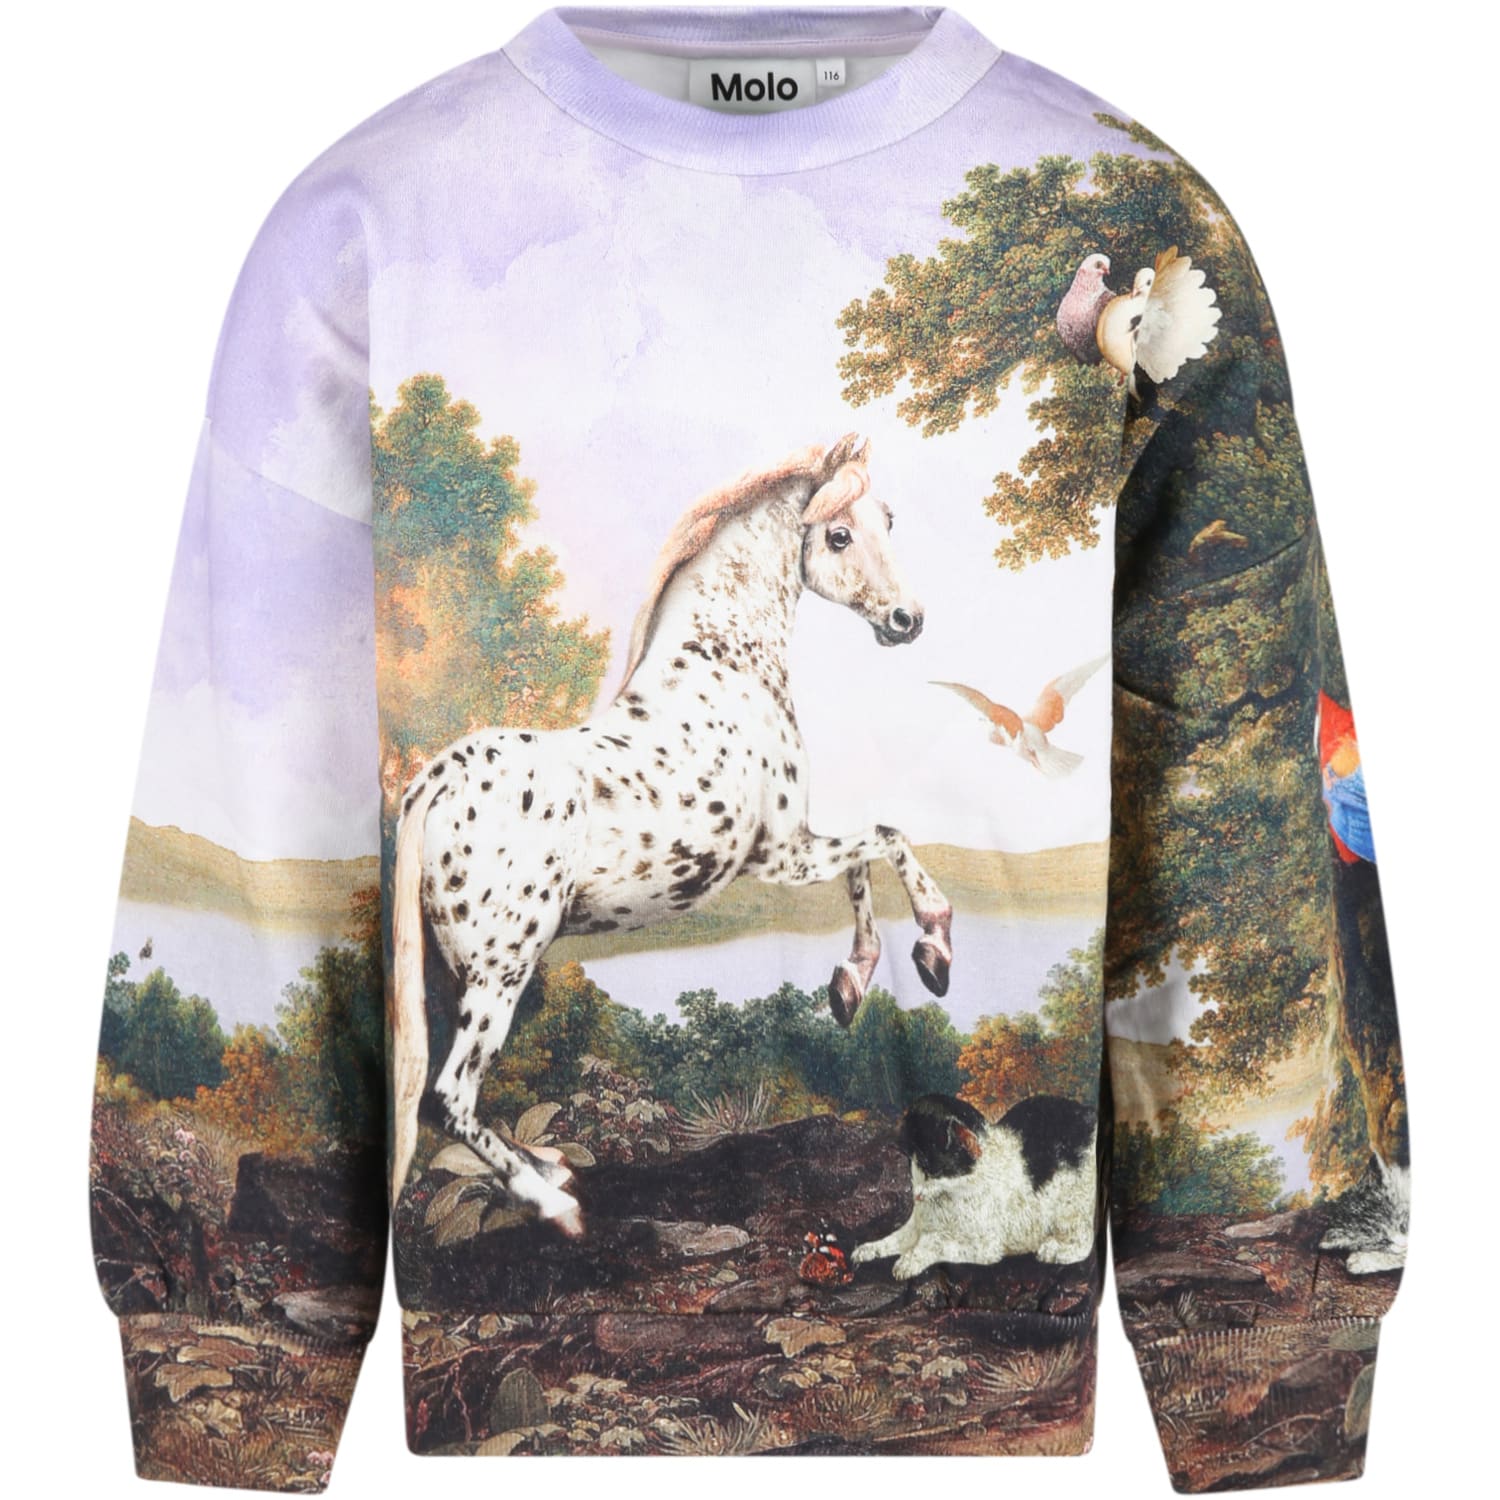 Molo Multicolor Sweatshirt For Girl With Poetic Landscape